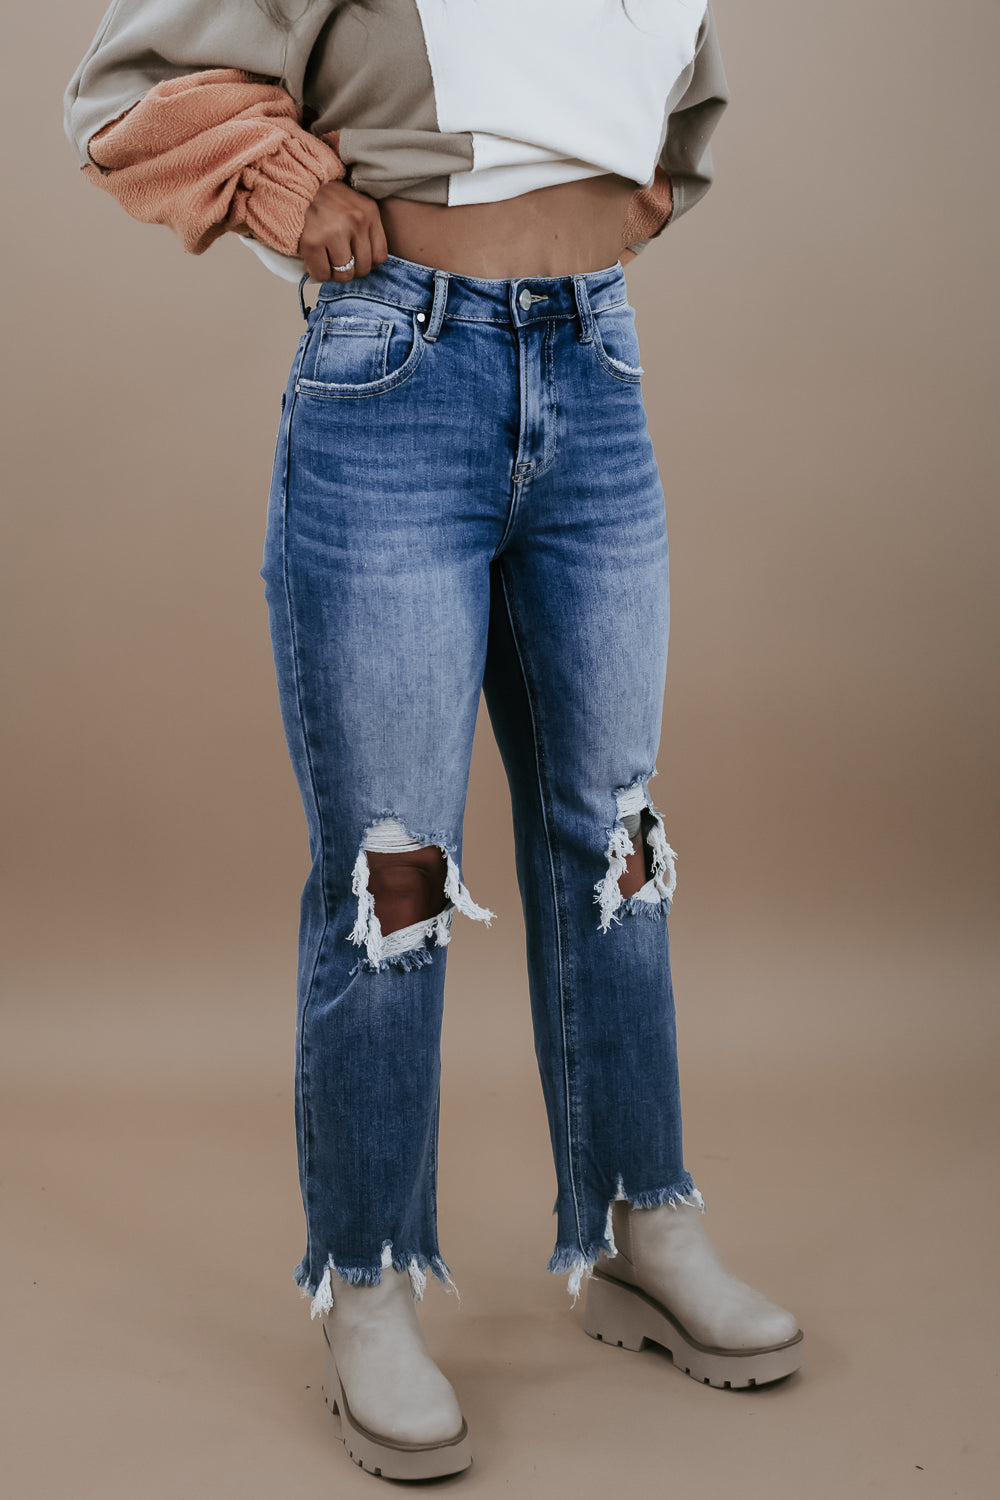 Risen Jeans High Rise Shorts in Black - The Mauve Shoppe